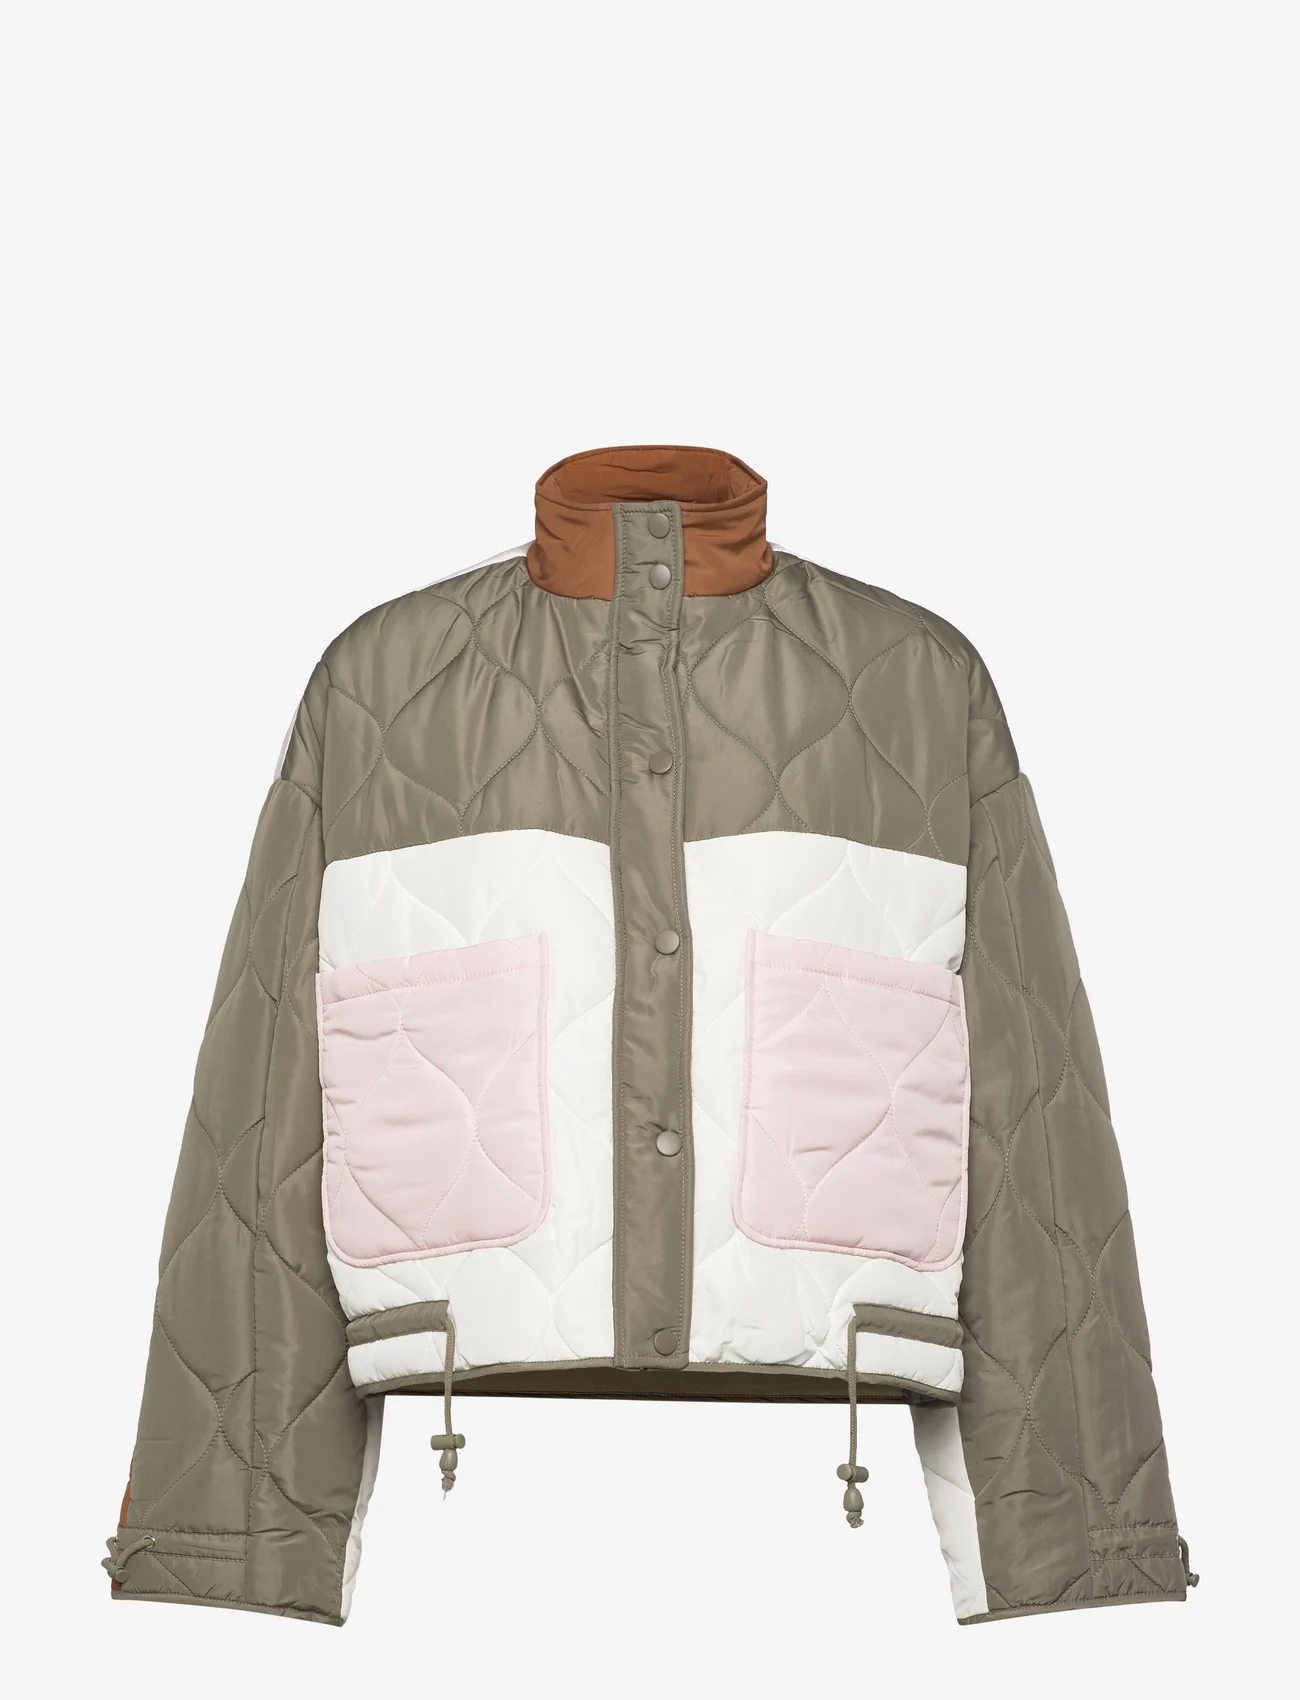 Coster Copenhagen - Patchwork padded jacket - patchwork color - 0